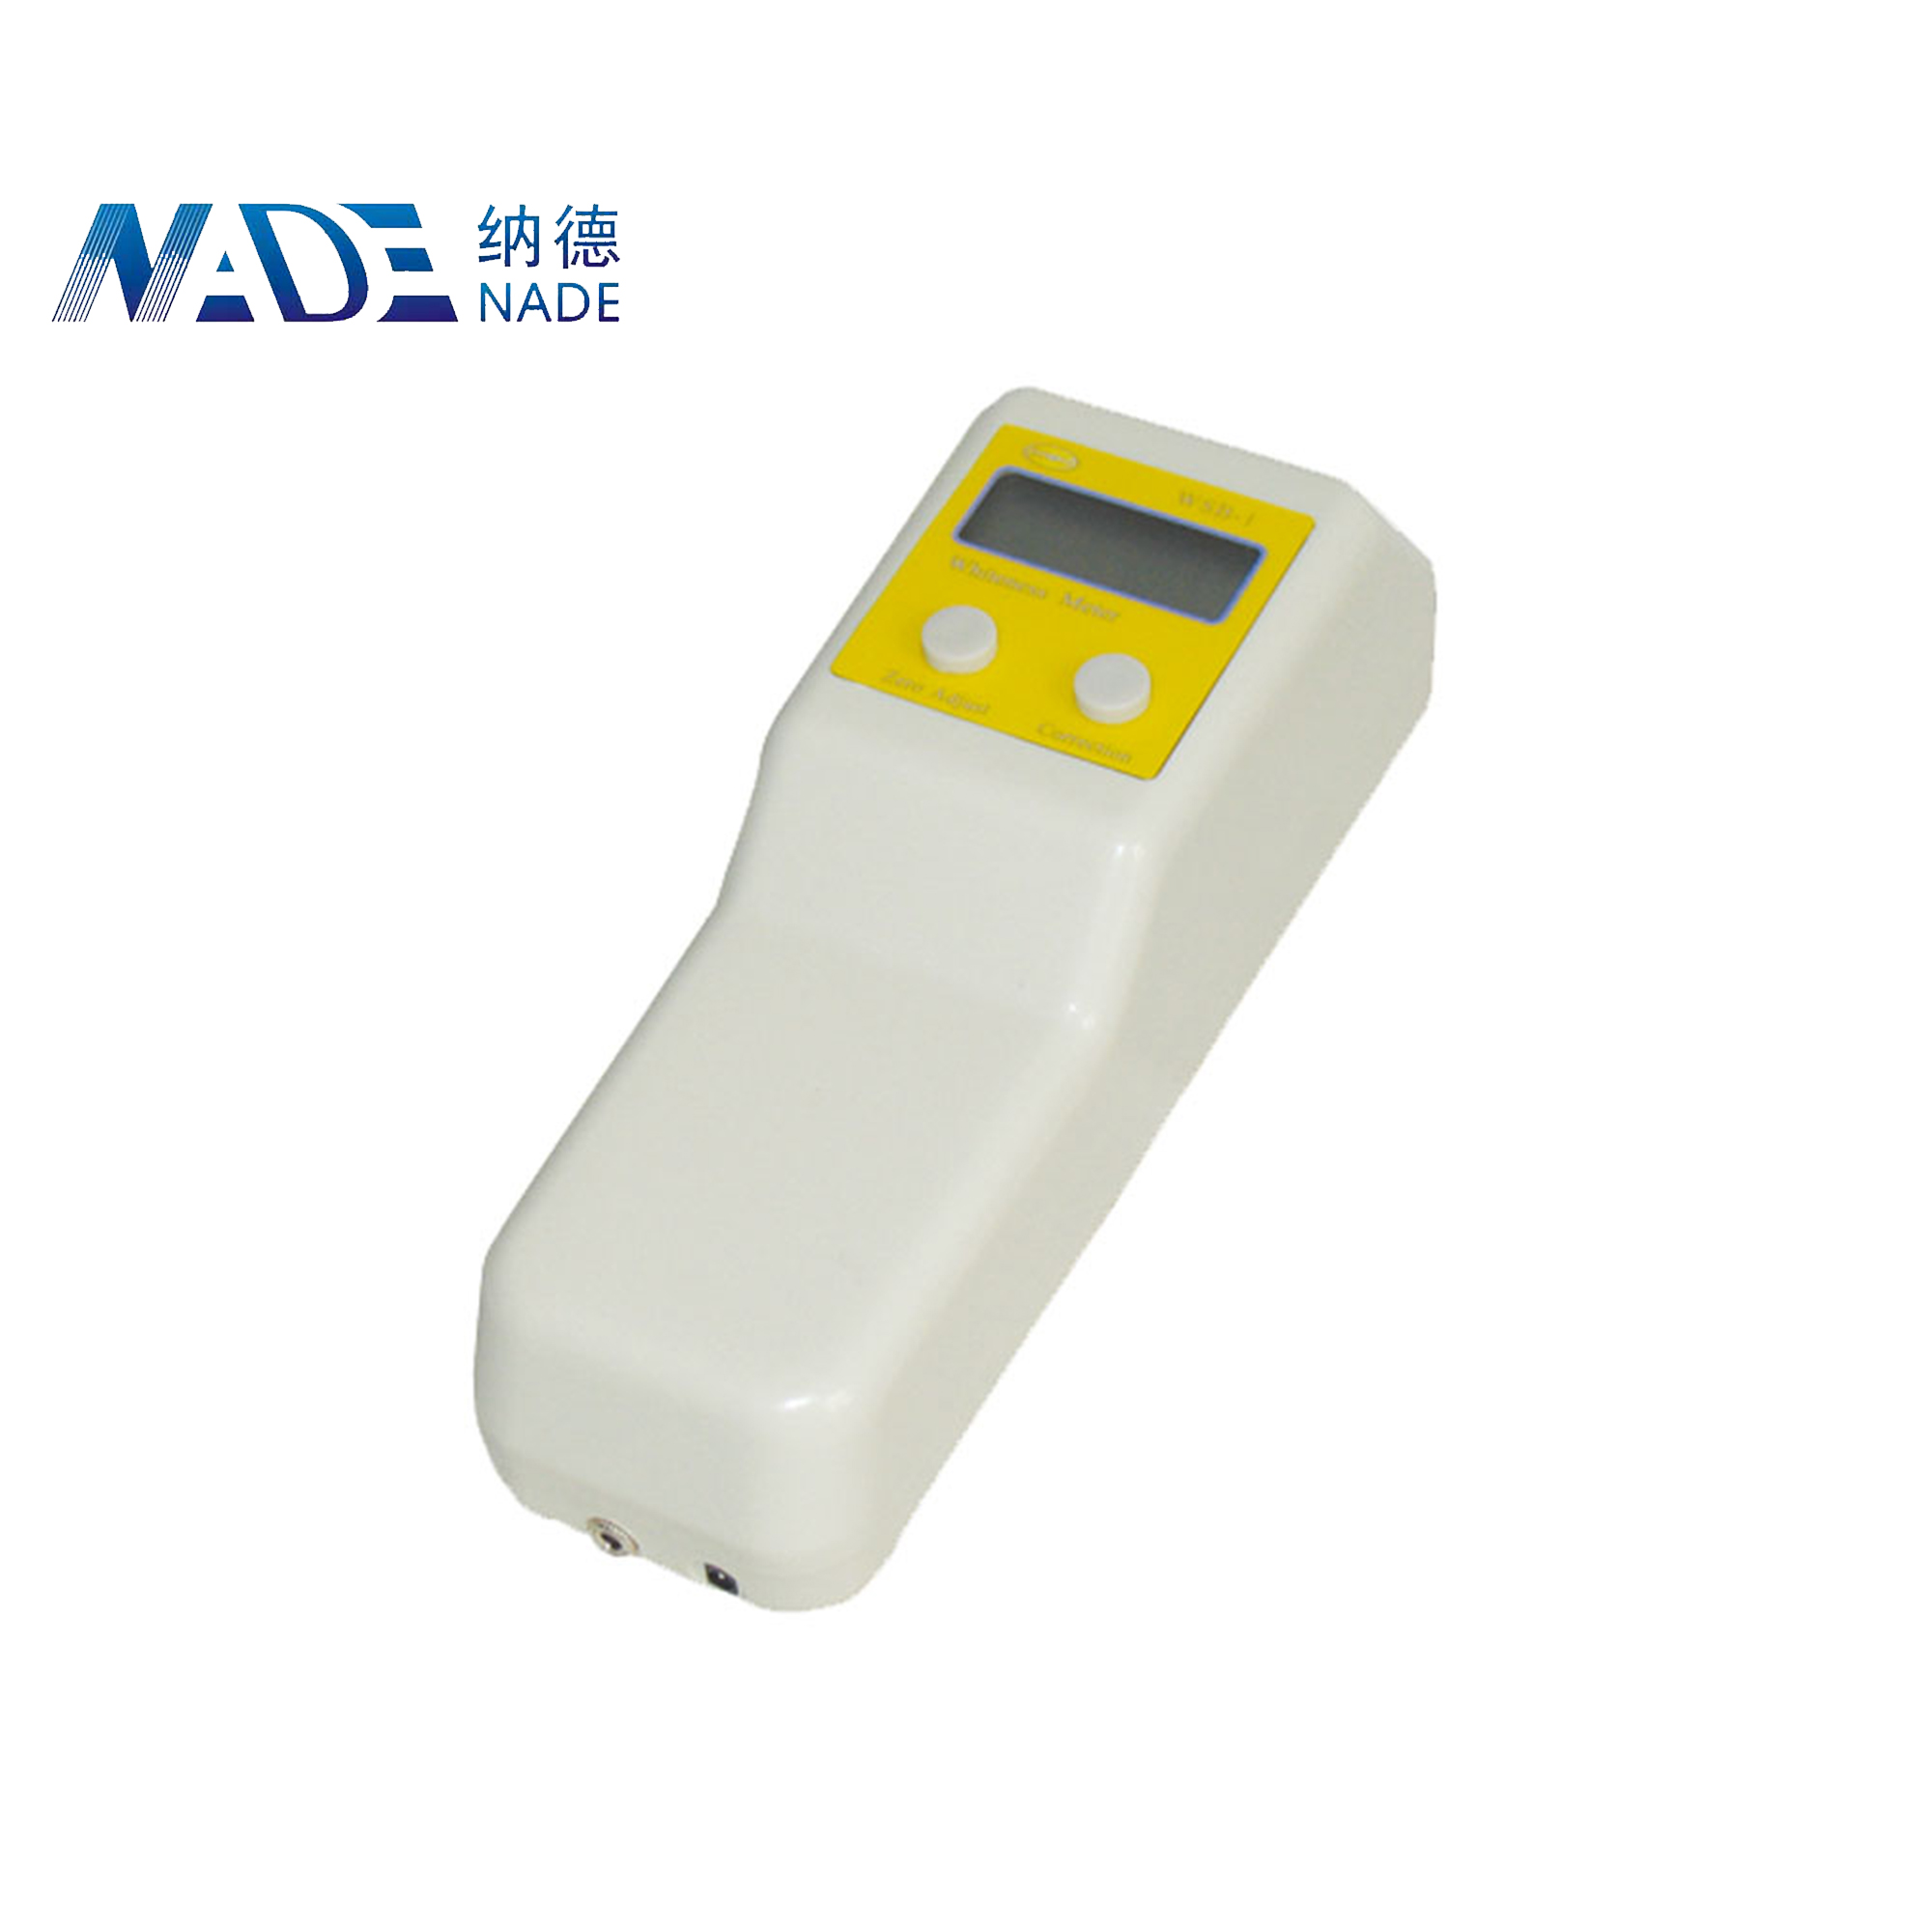 Nade Lab Testing Equipment digital Whiteness Meter WSB-1